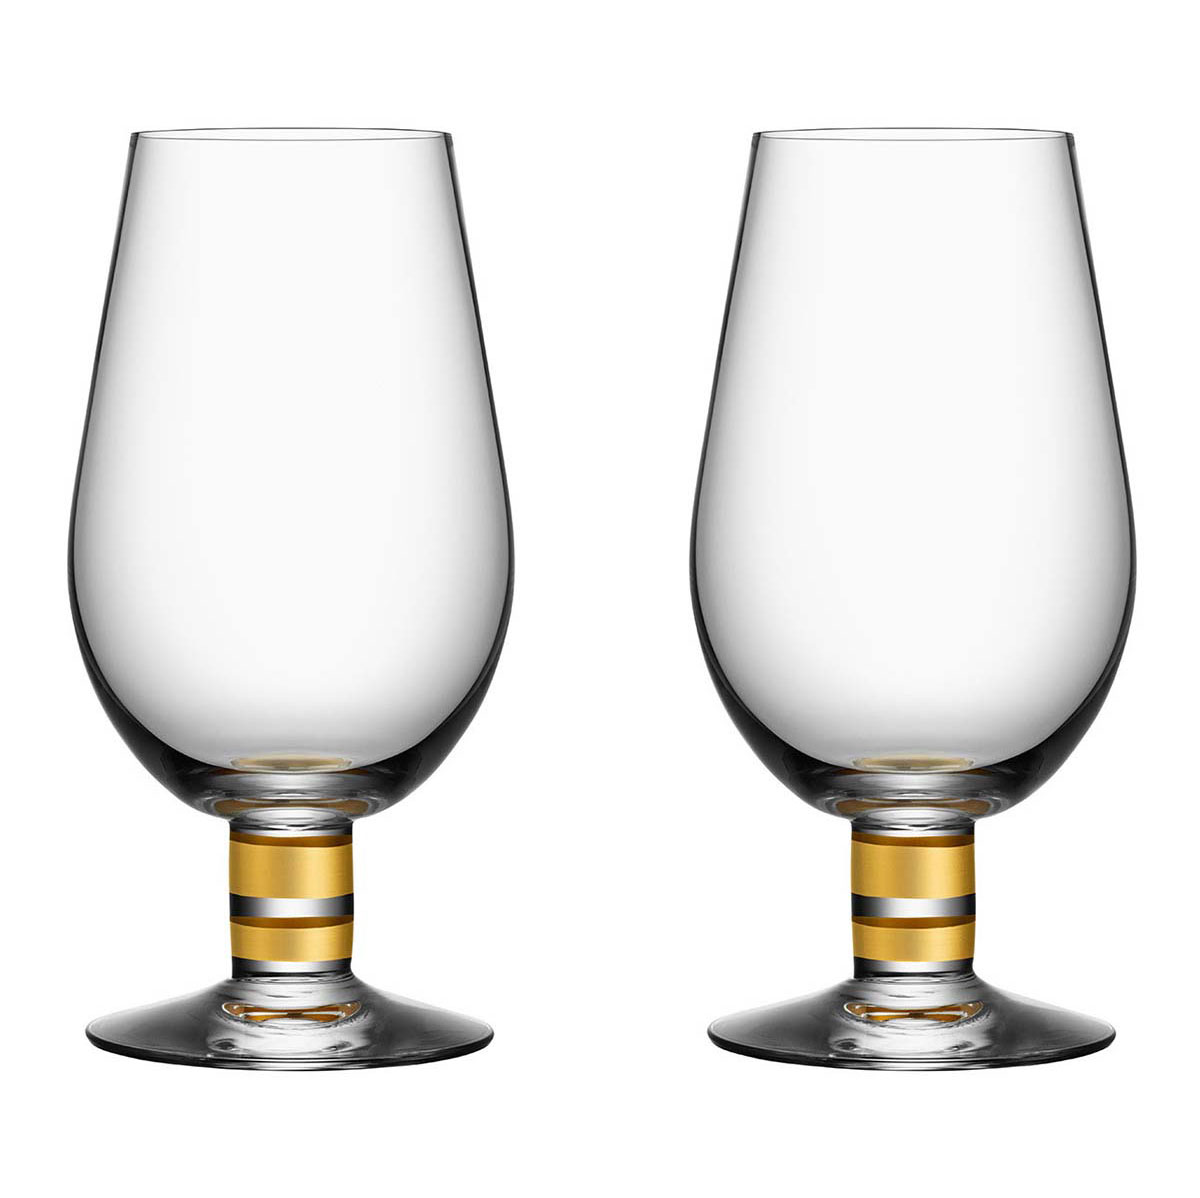 Orrefors Crystal, Morberg Exclusive Beer Glass, Pair